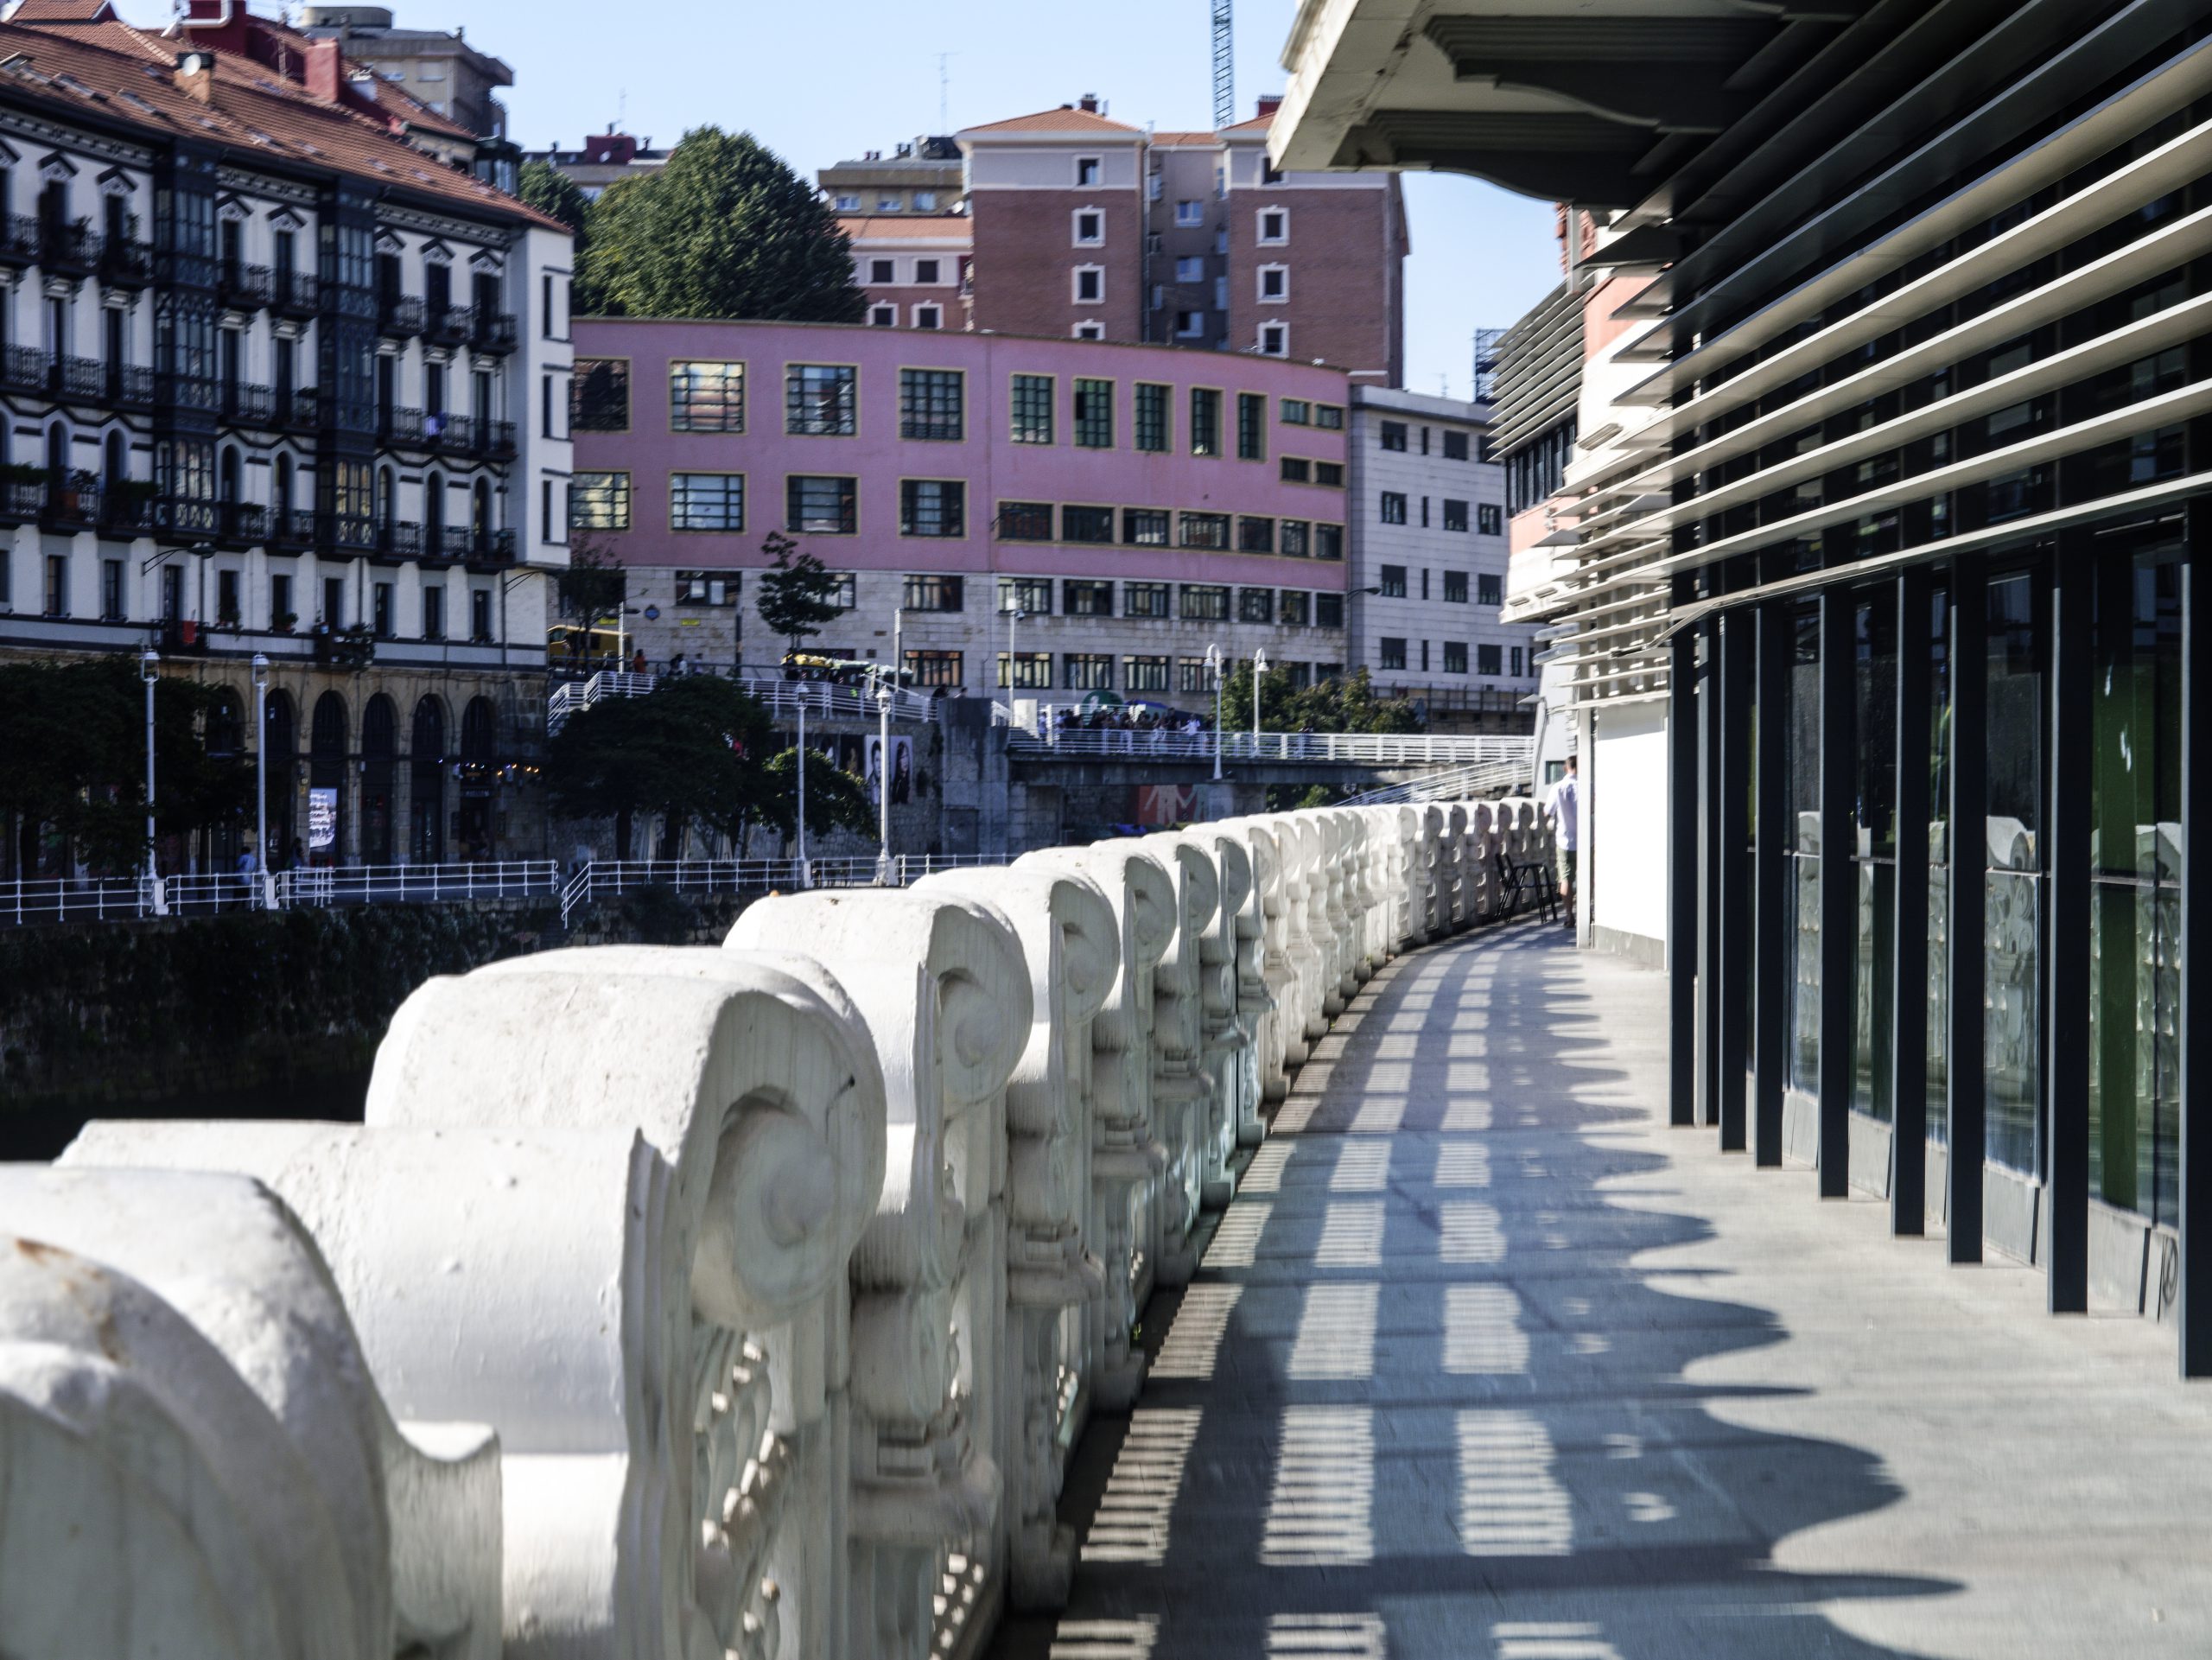 Bilbao Old Town Center II